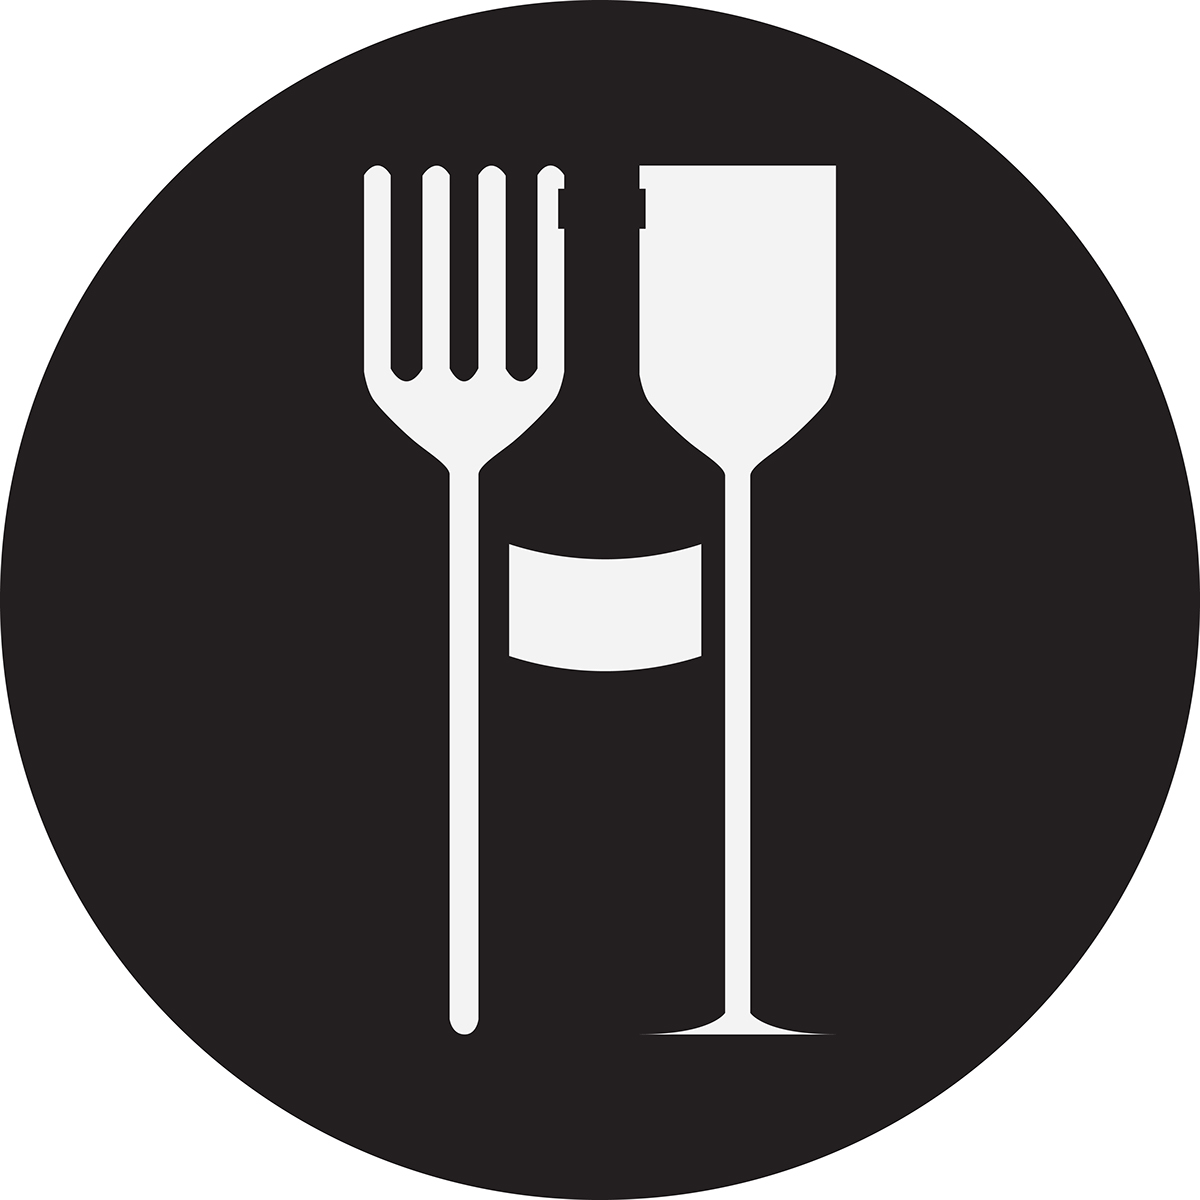 Corporate Design logo  winebar identity  bar  wine